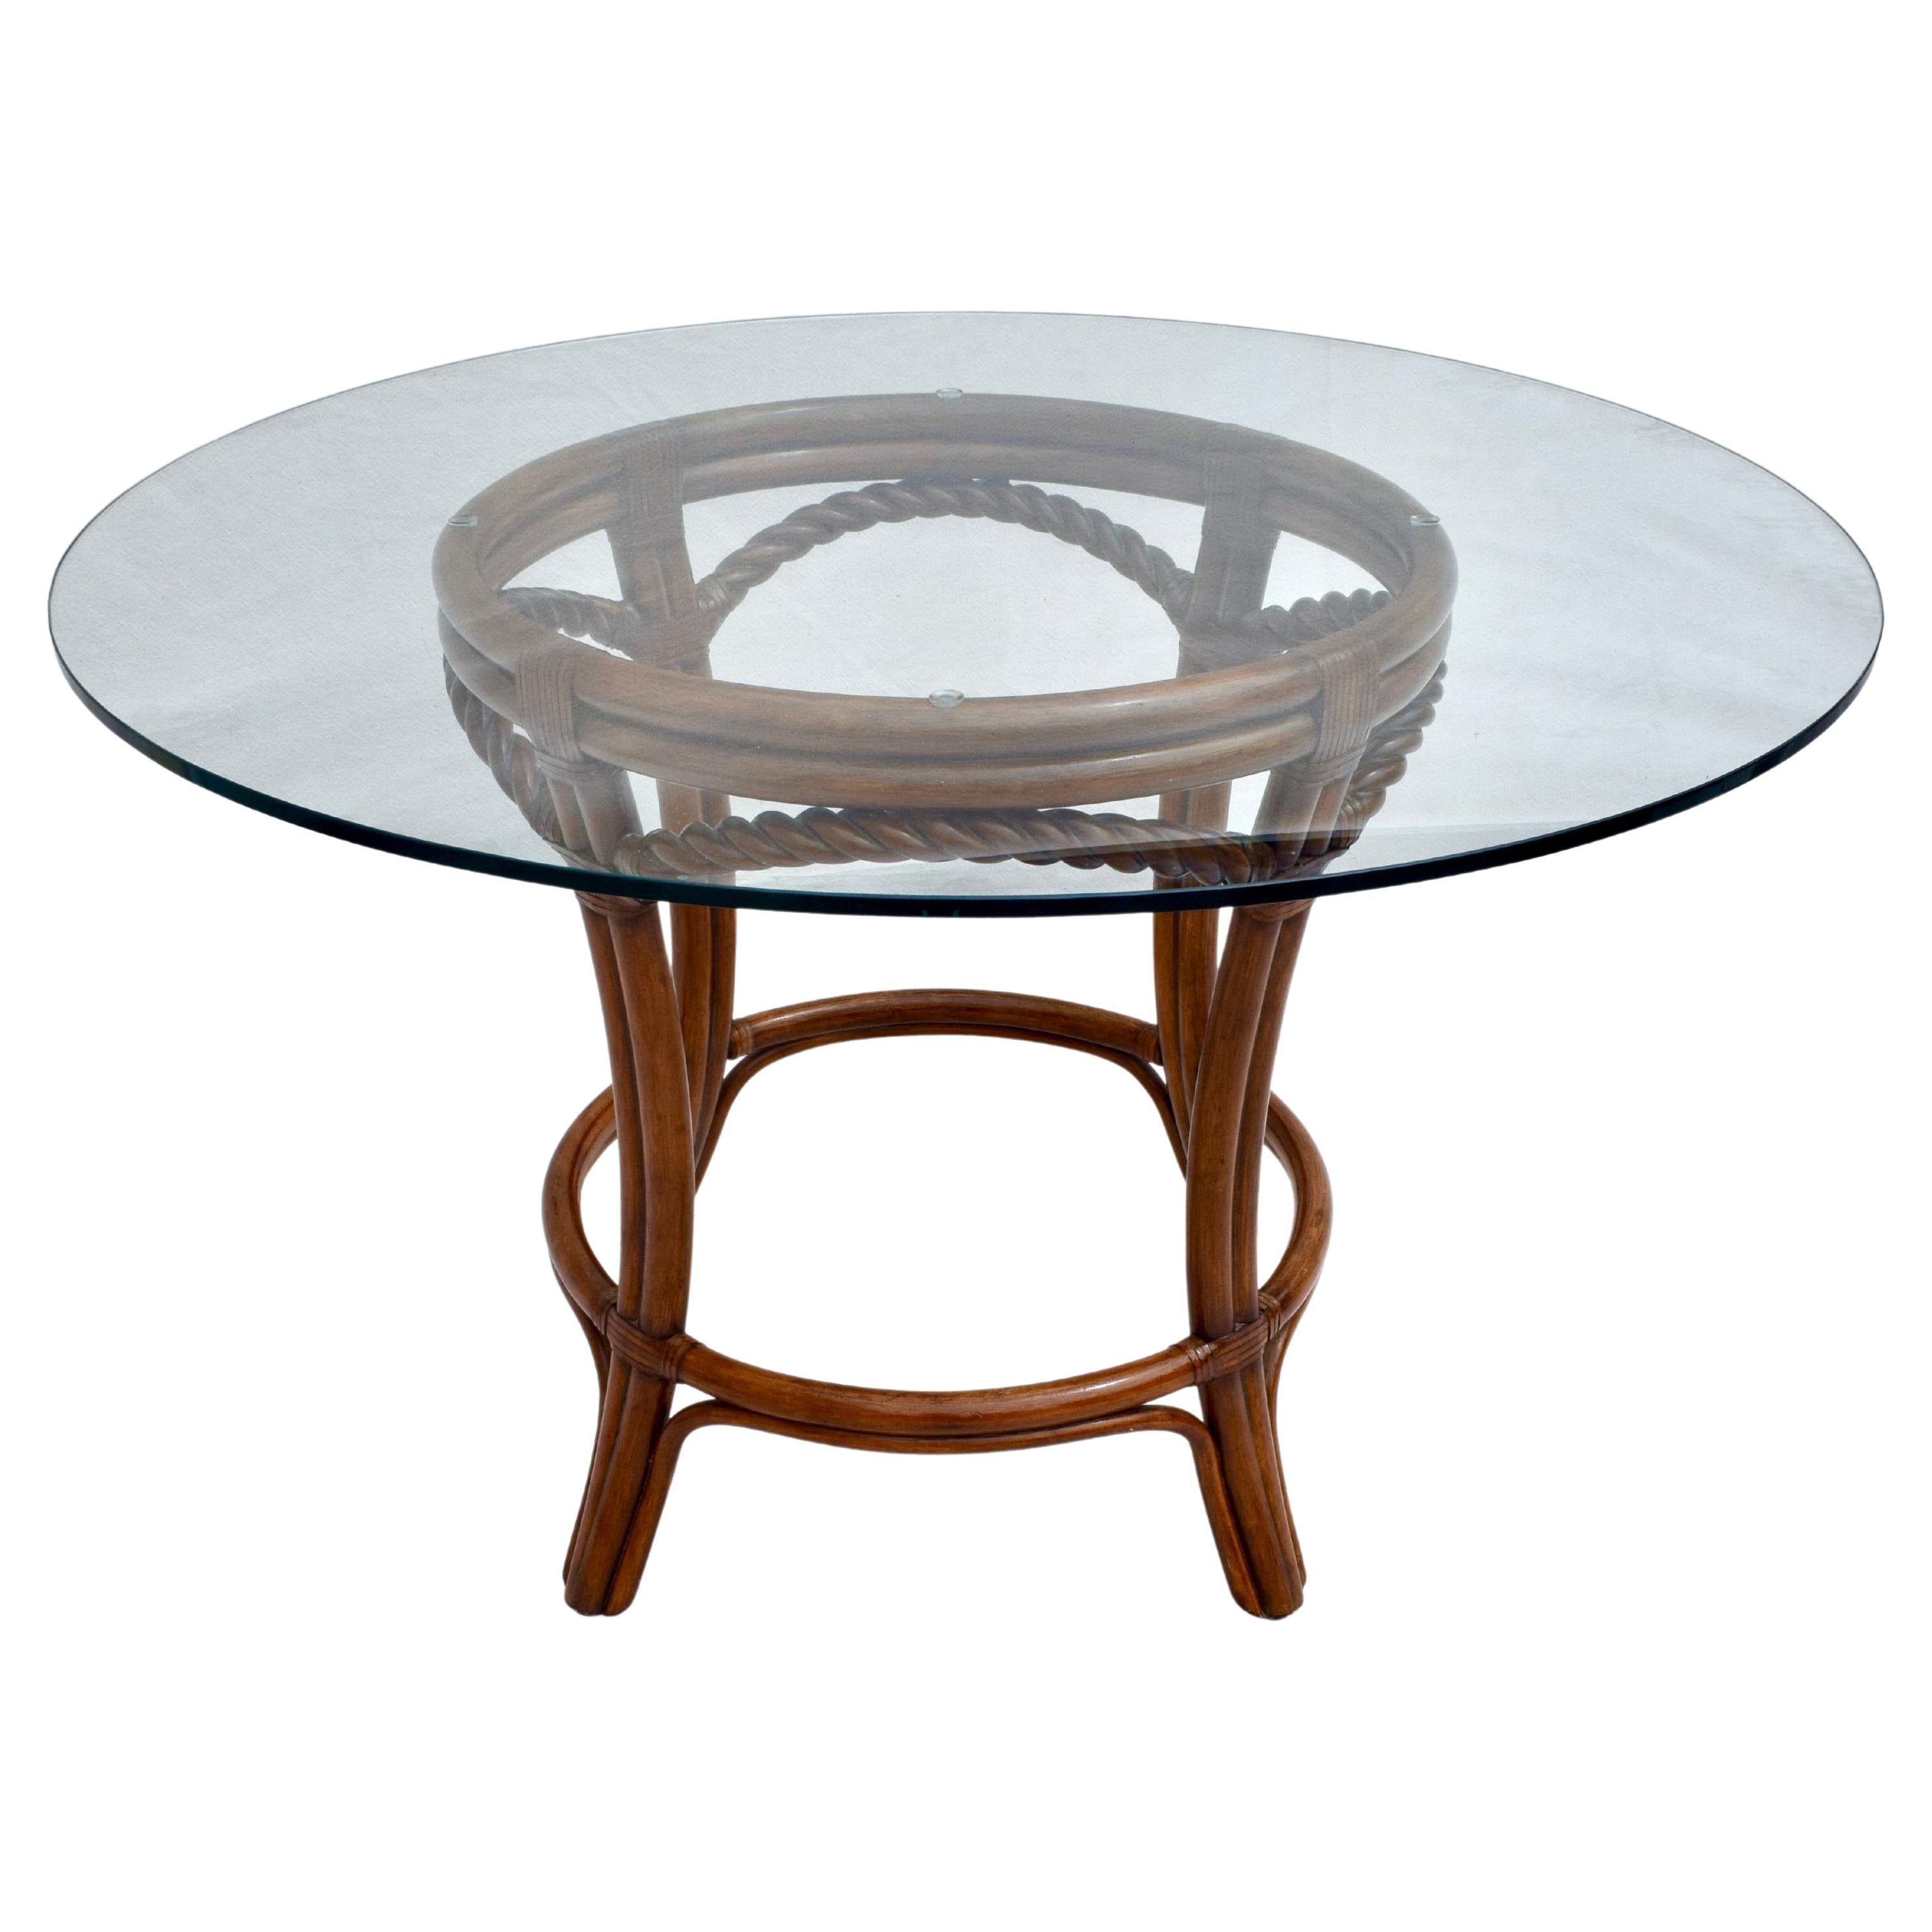 Palecek French Regency Style Pedestal Dining Table For Sale